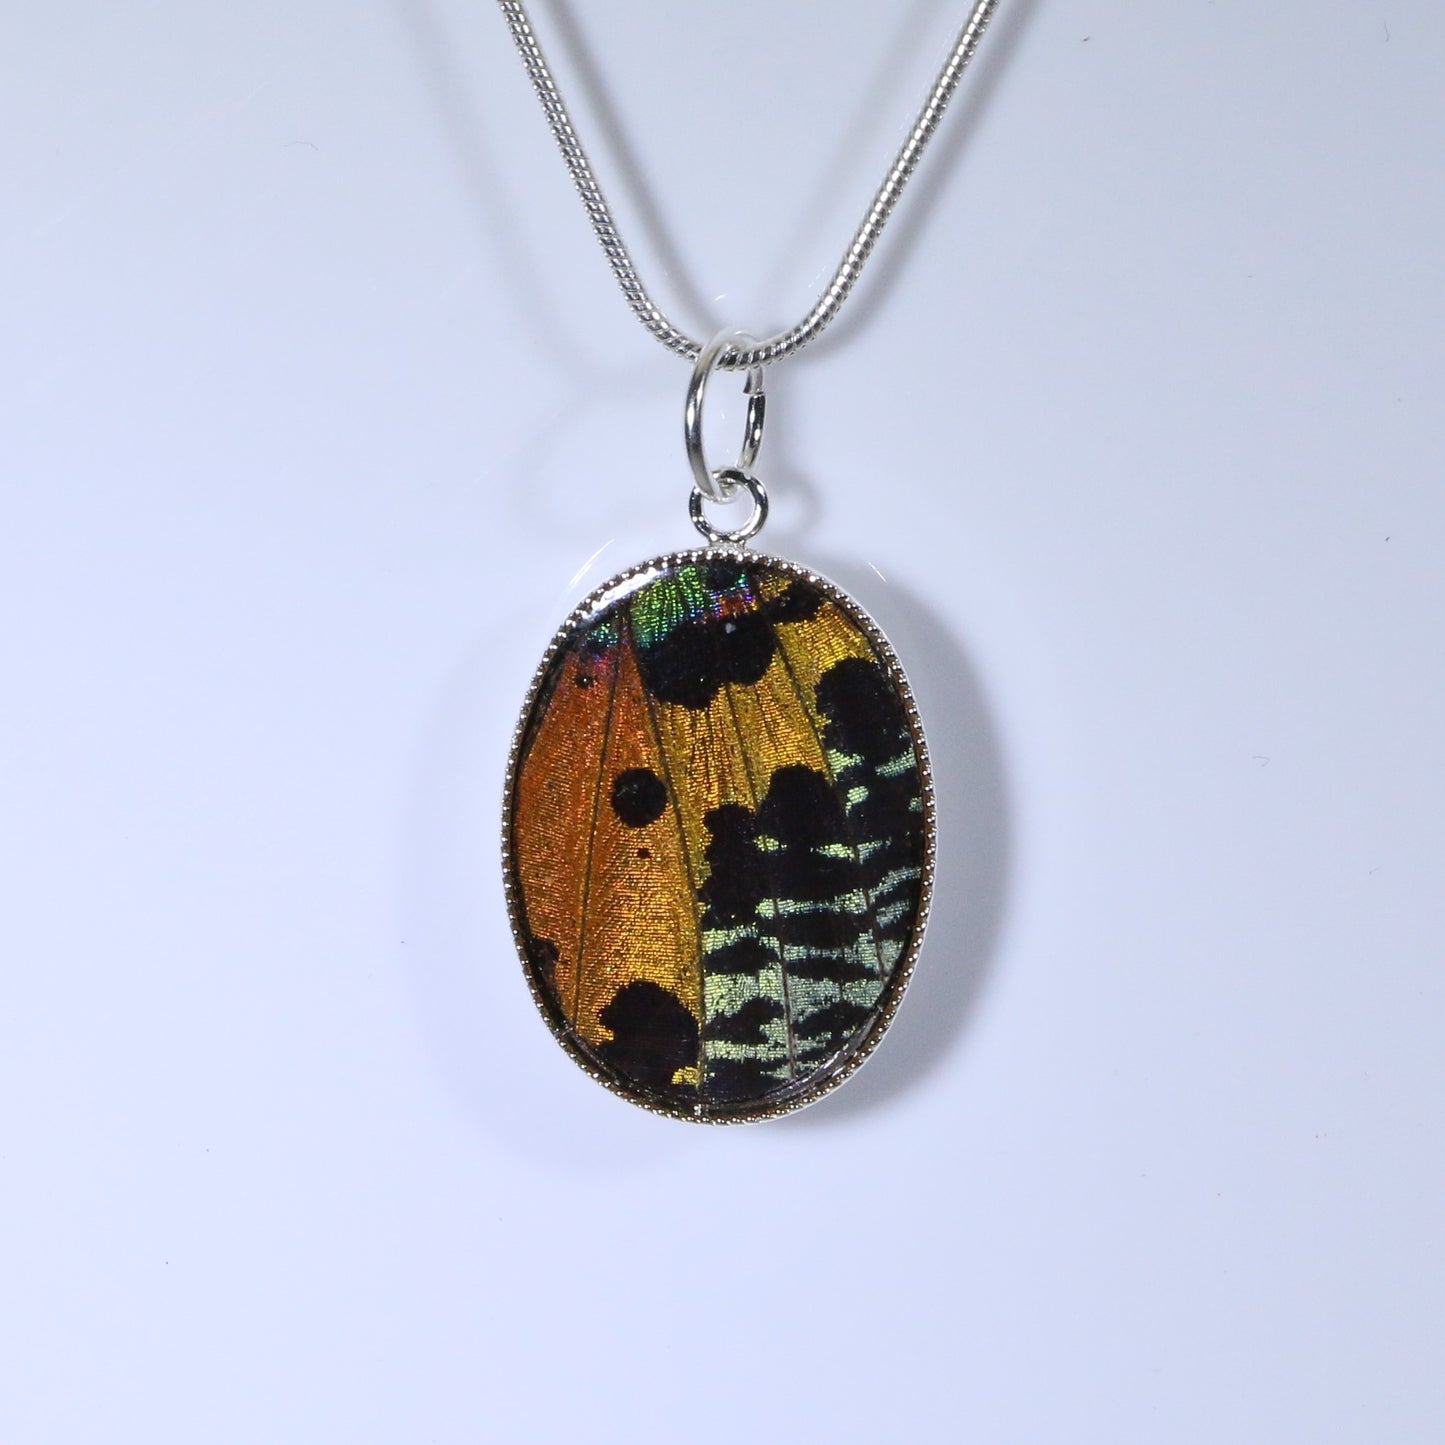 52202 - Real Butterfly Wing Jewelry - Pendant - Medium - Sunset Moth - Orange